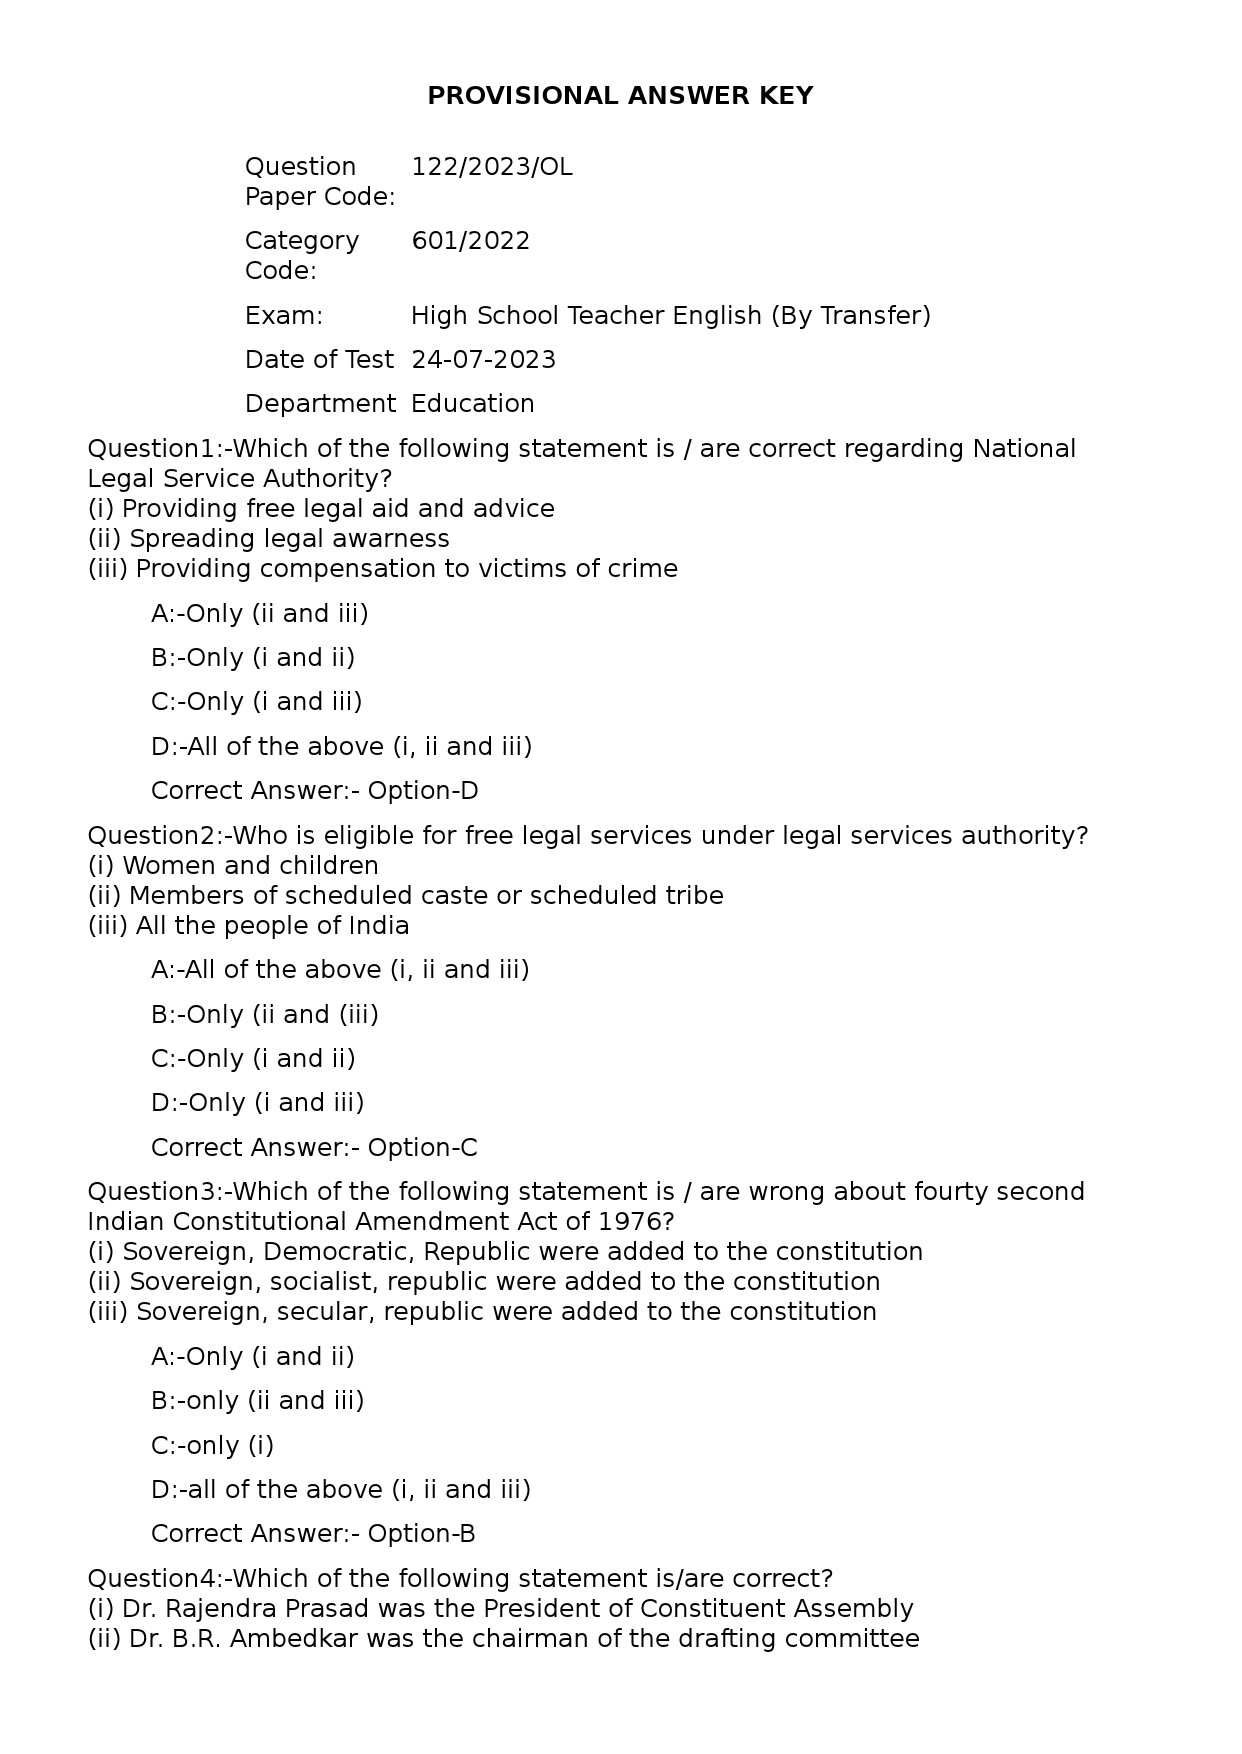 KPSC High School Teacher English Exam 2023 Code 1222023OL 1